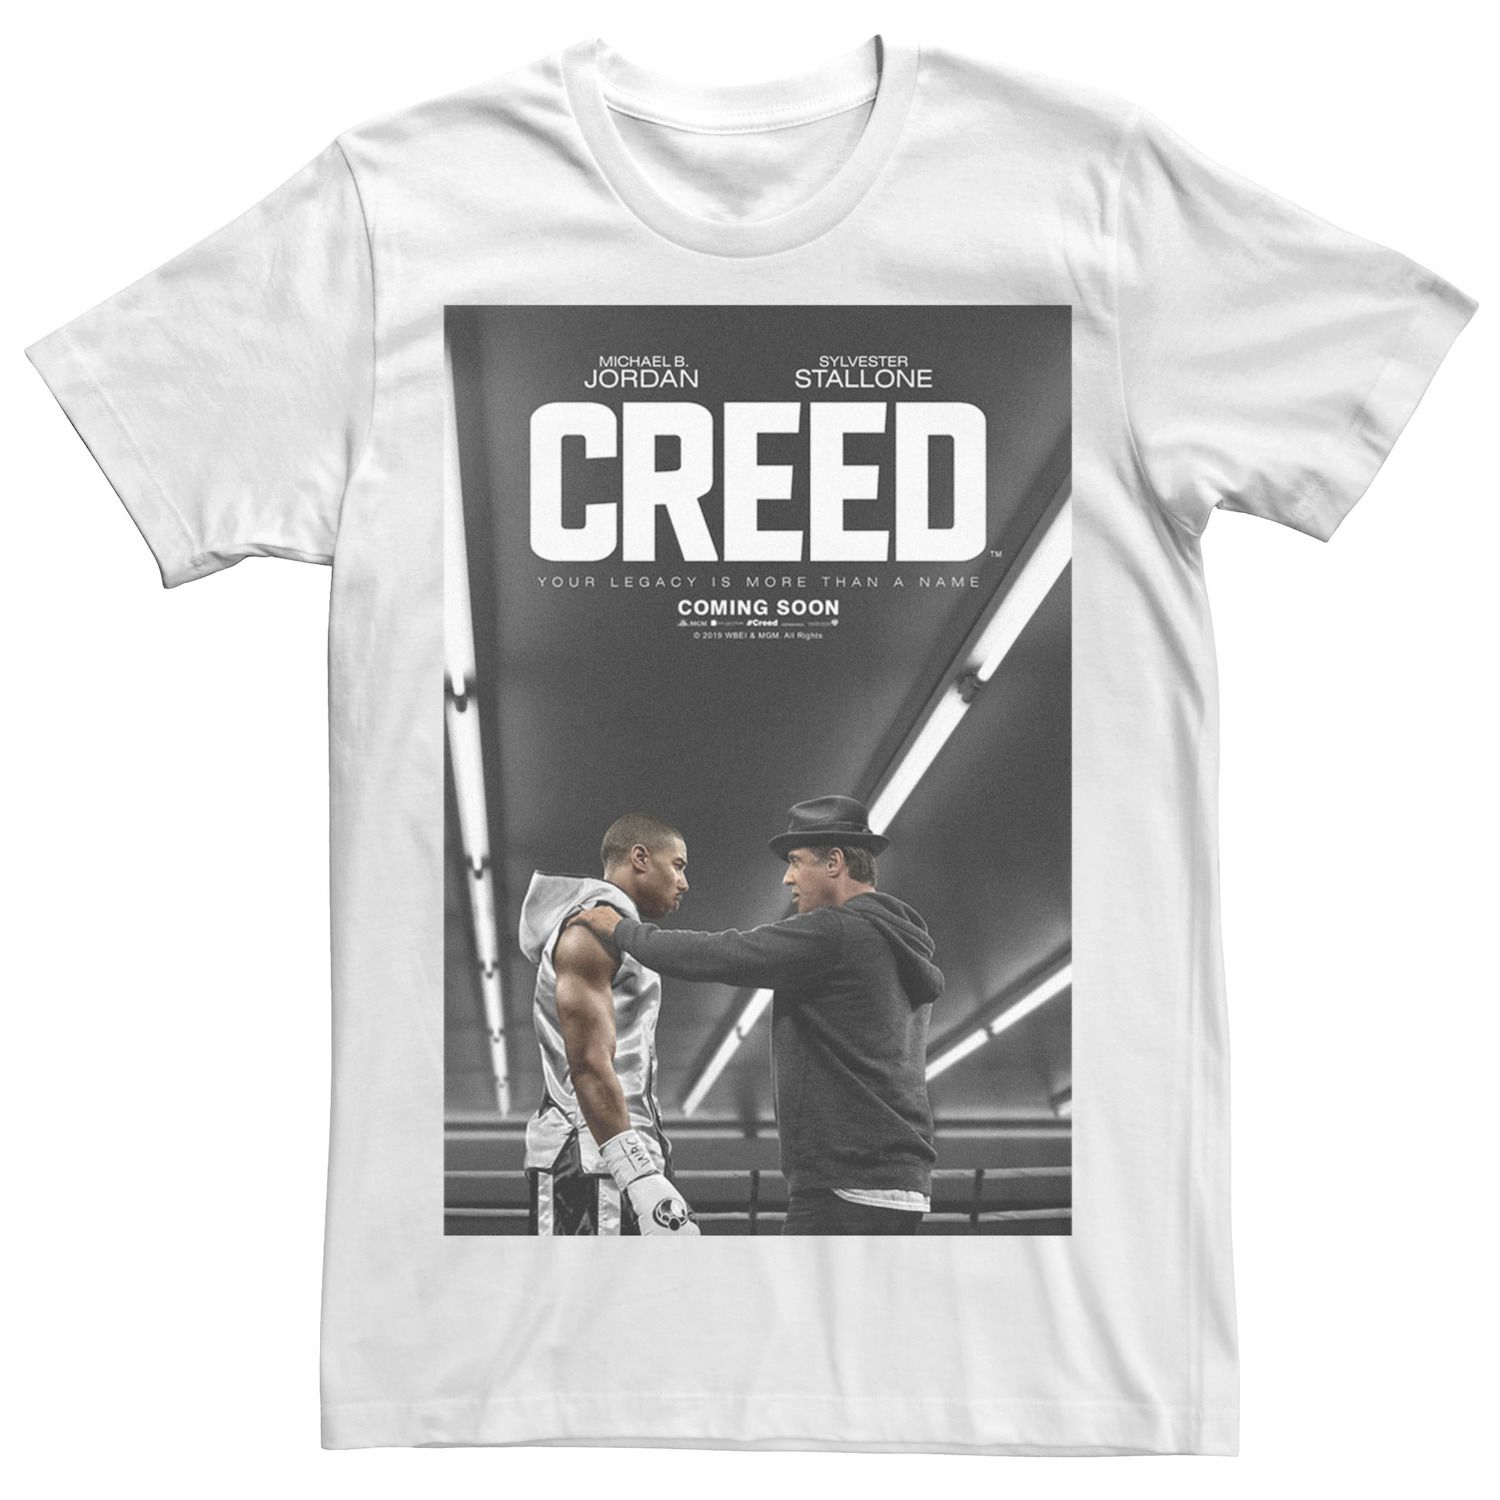 Мужская футболка Creed (One) Creed с графическим плакатом Licensed Character